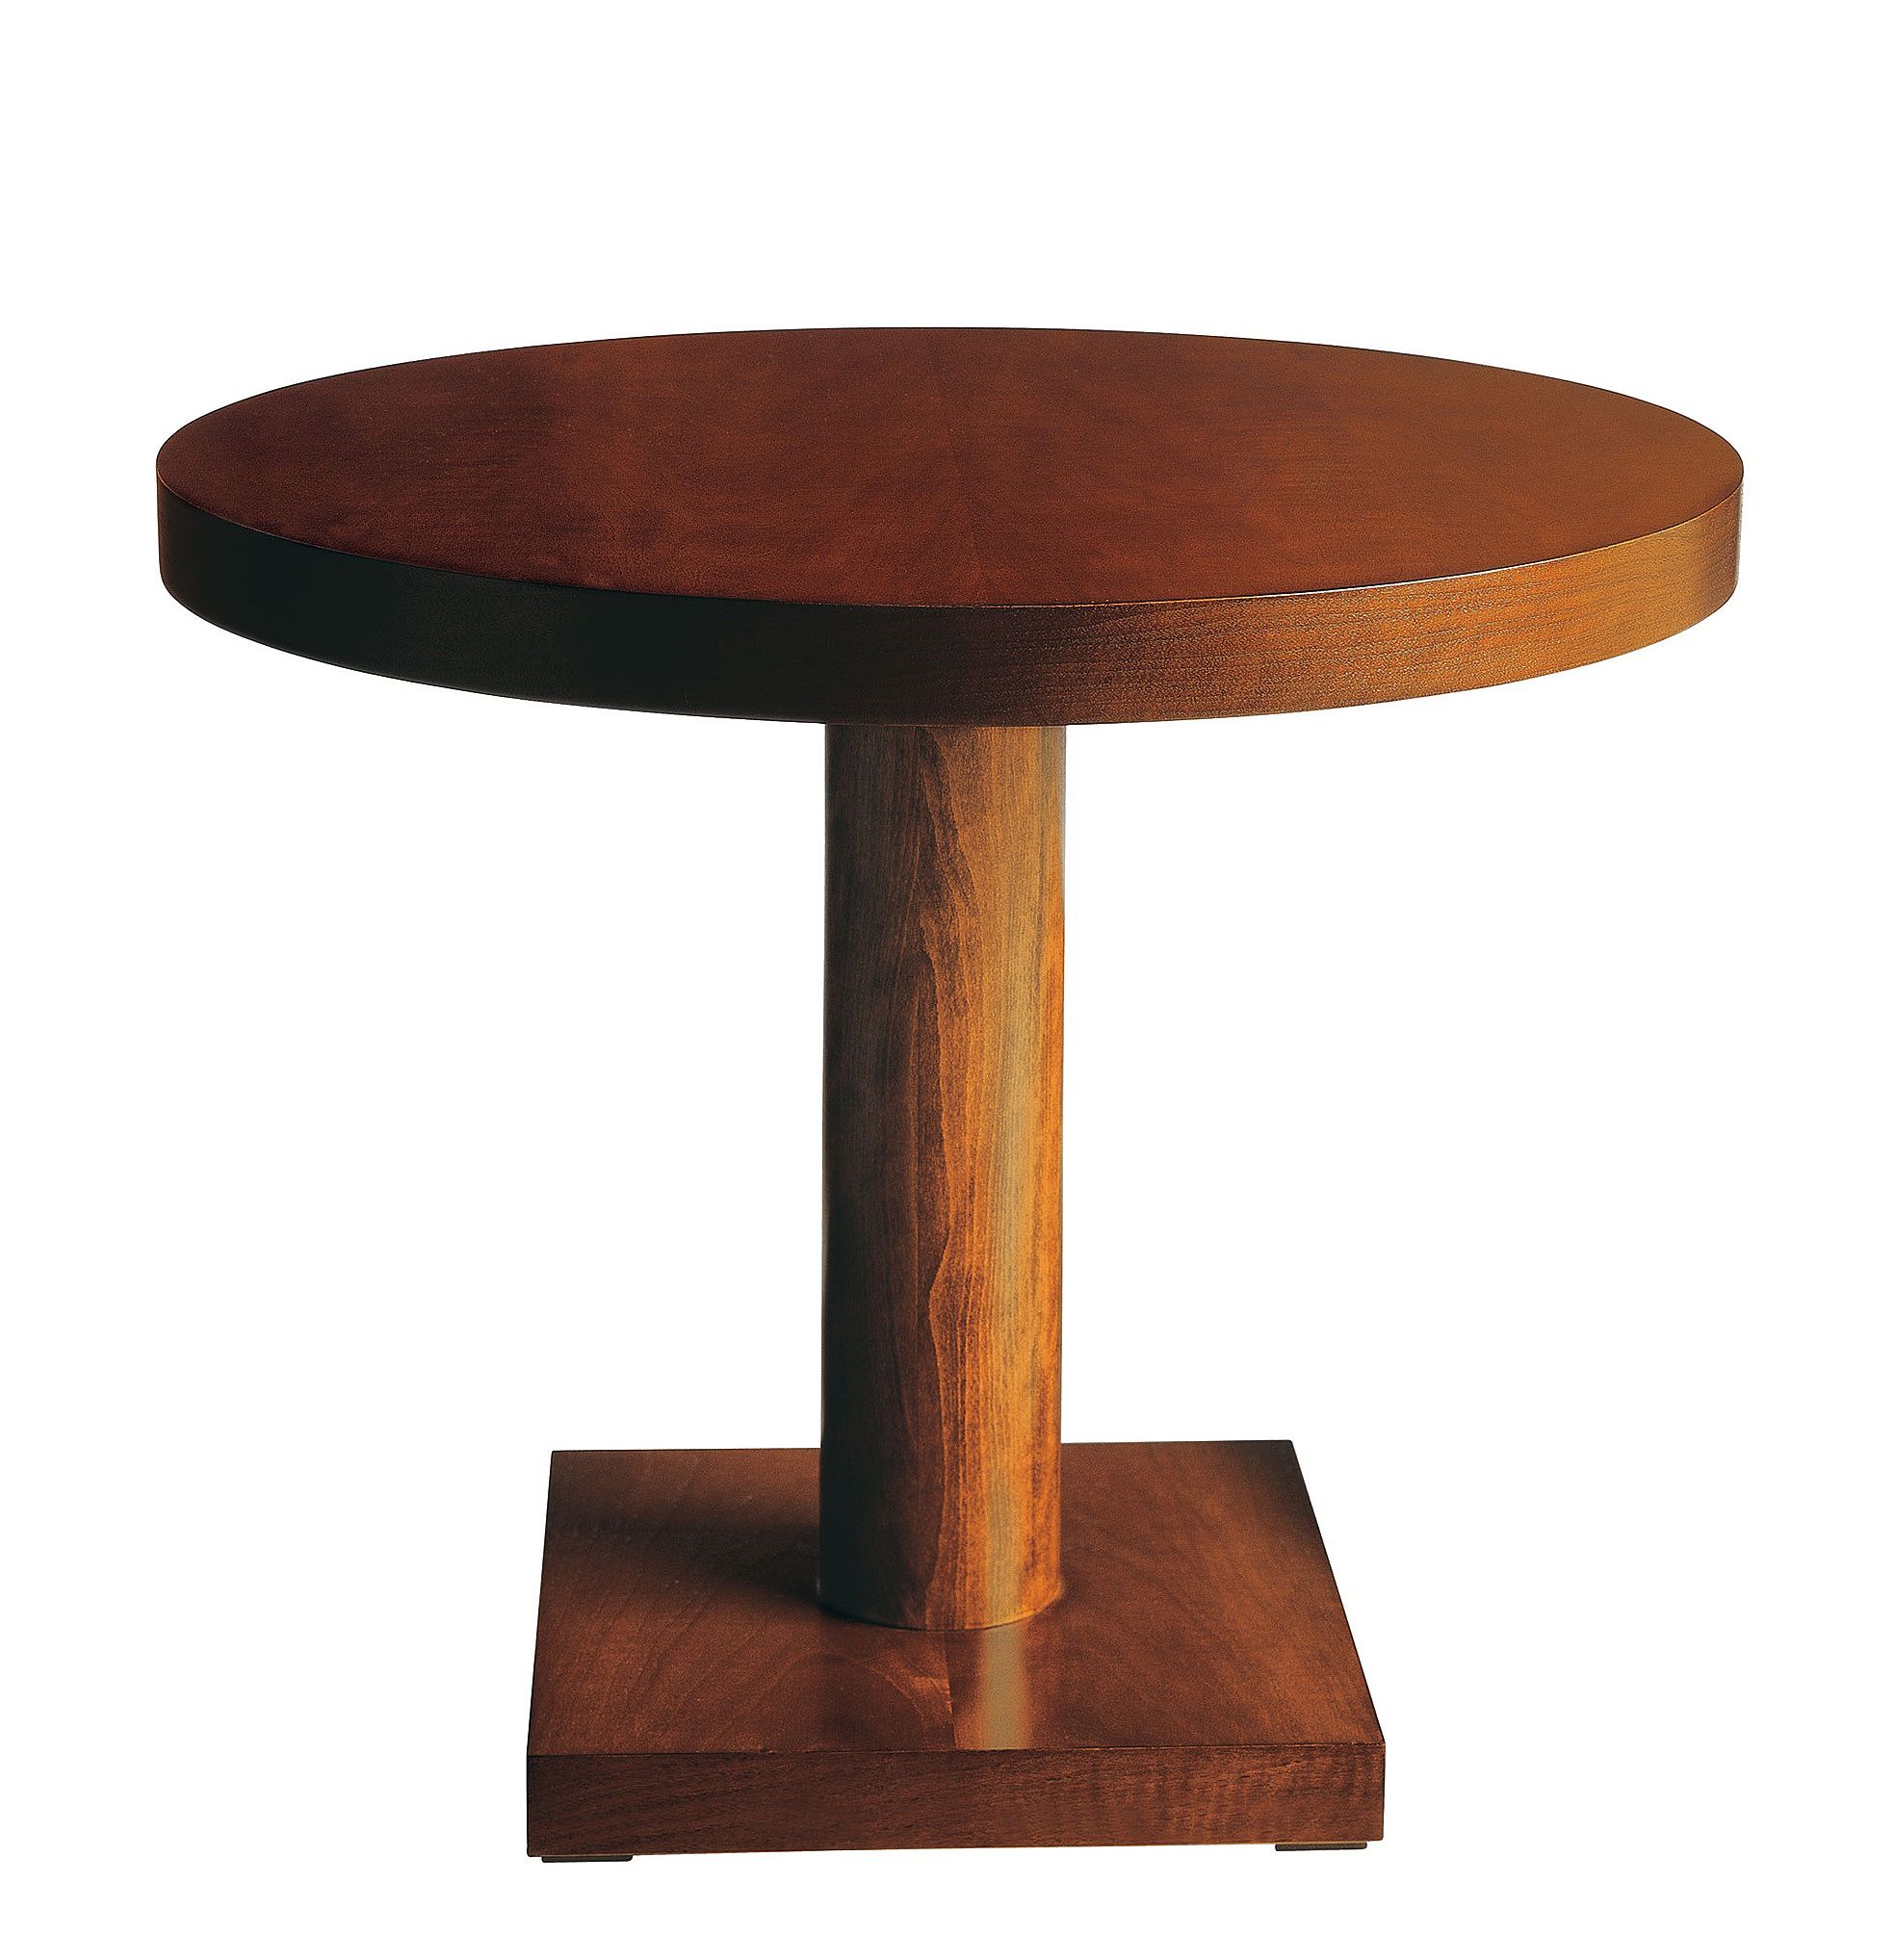 Contemporary round pedestal table